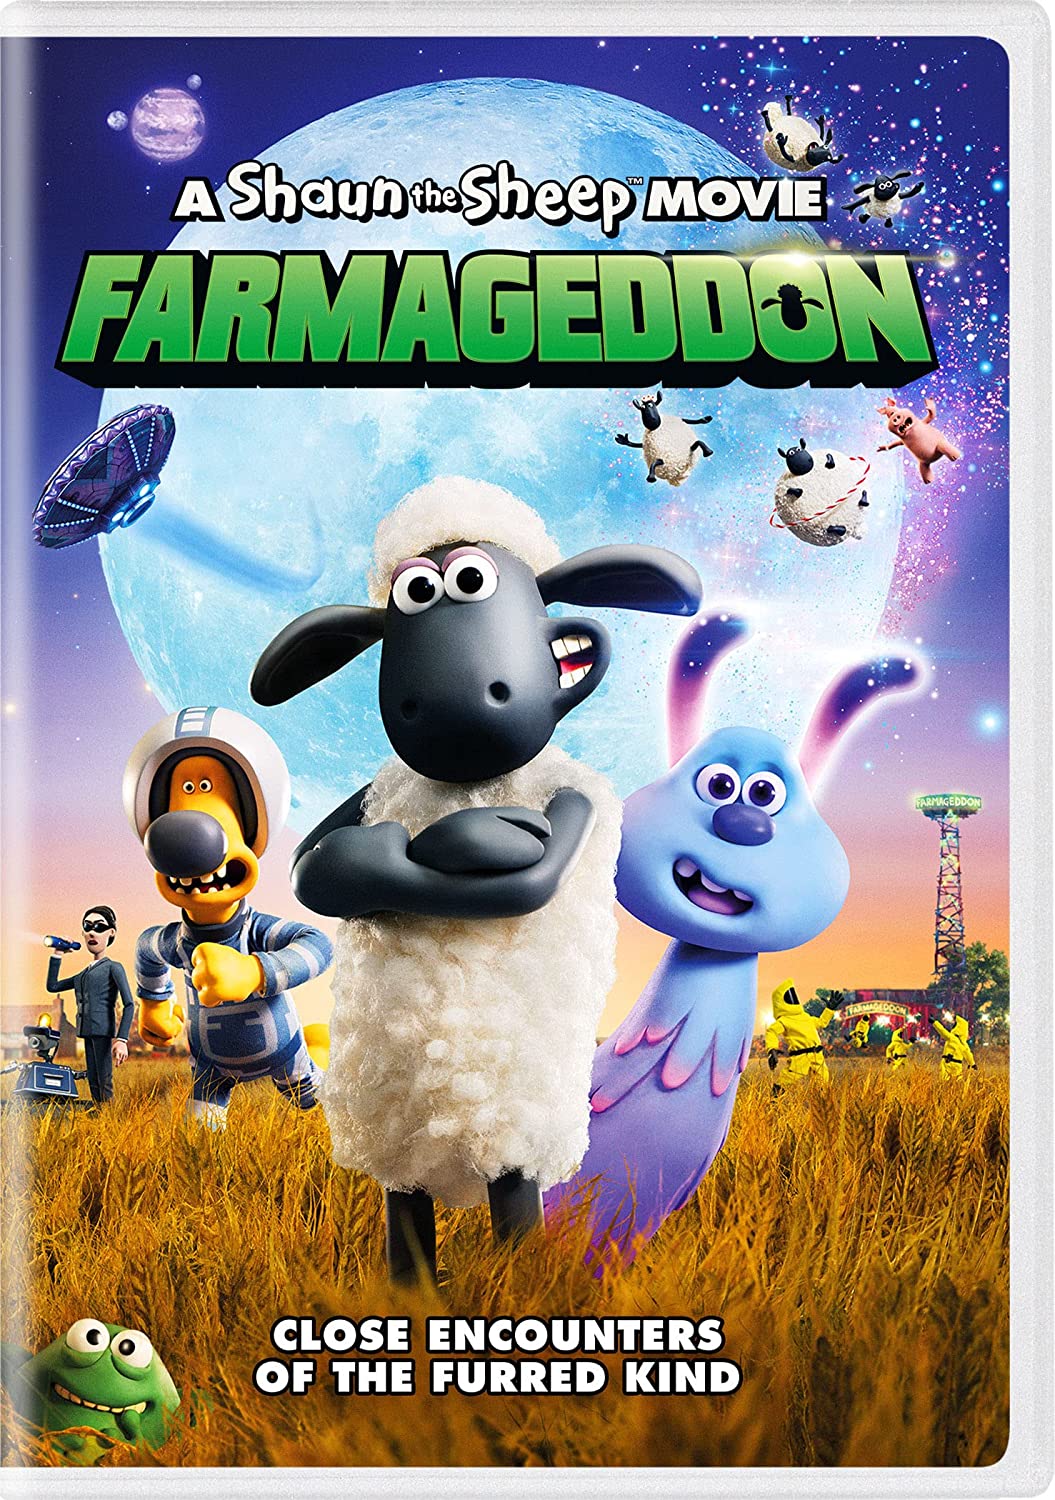 Image for "Farmageddon"